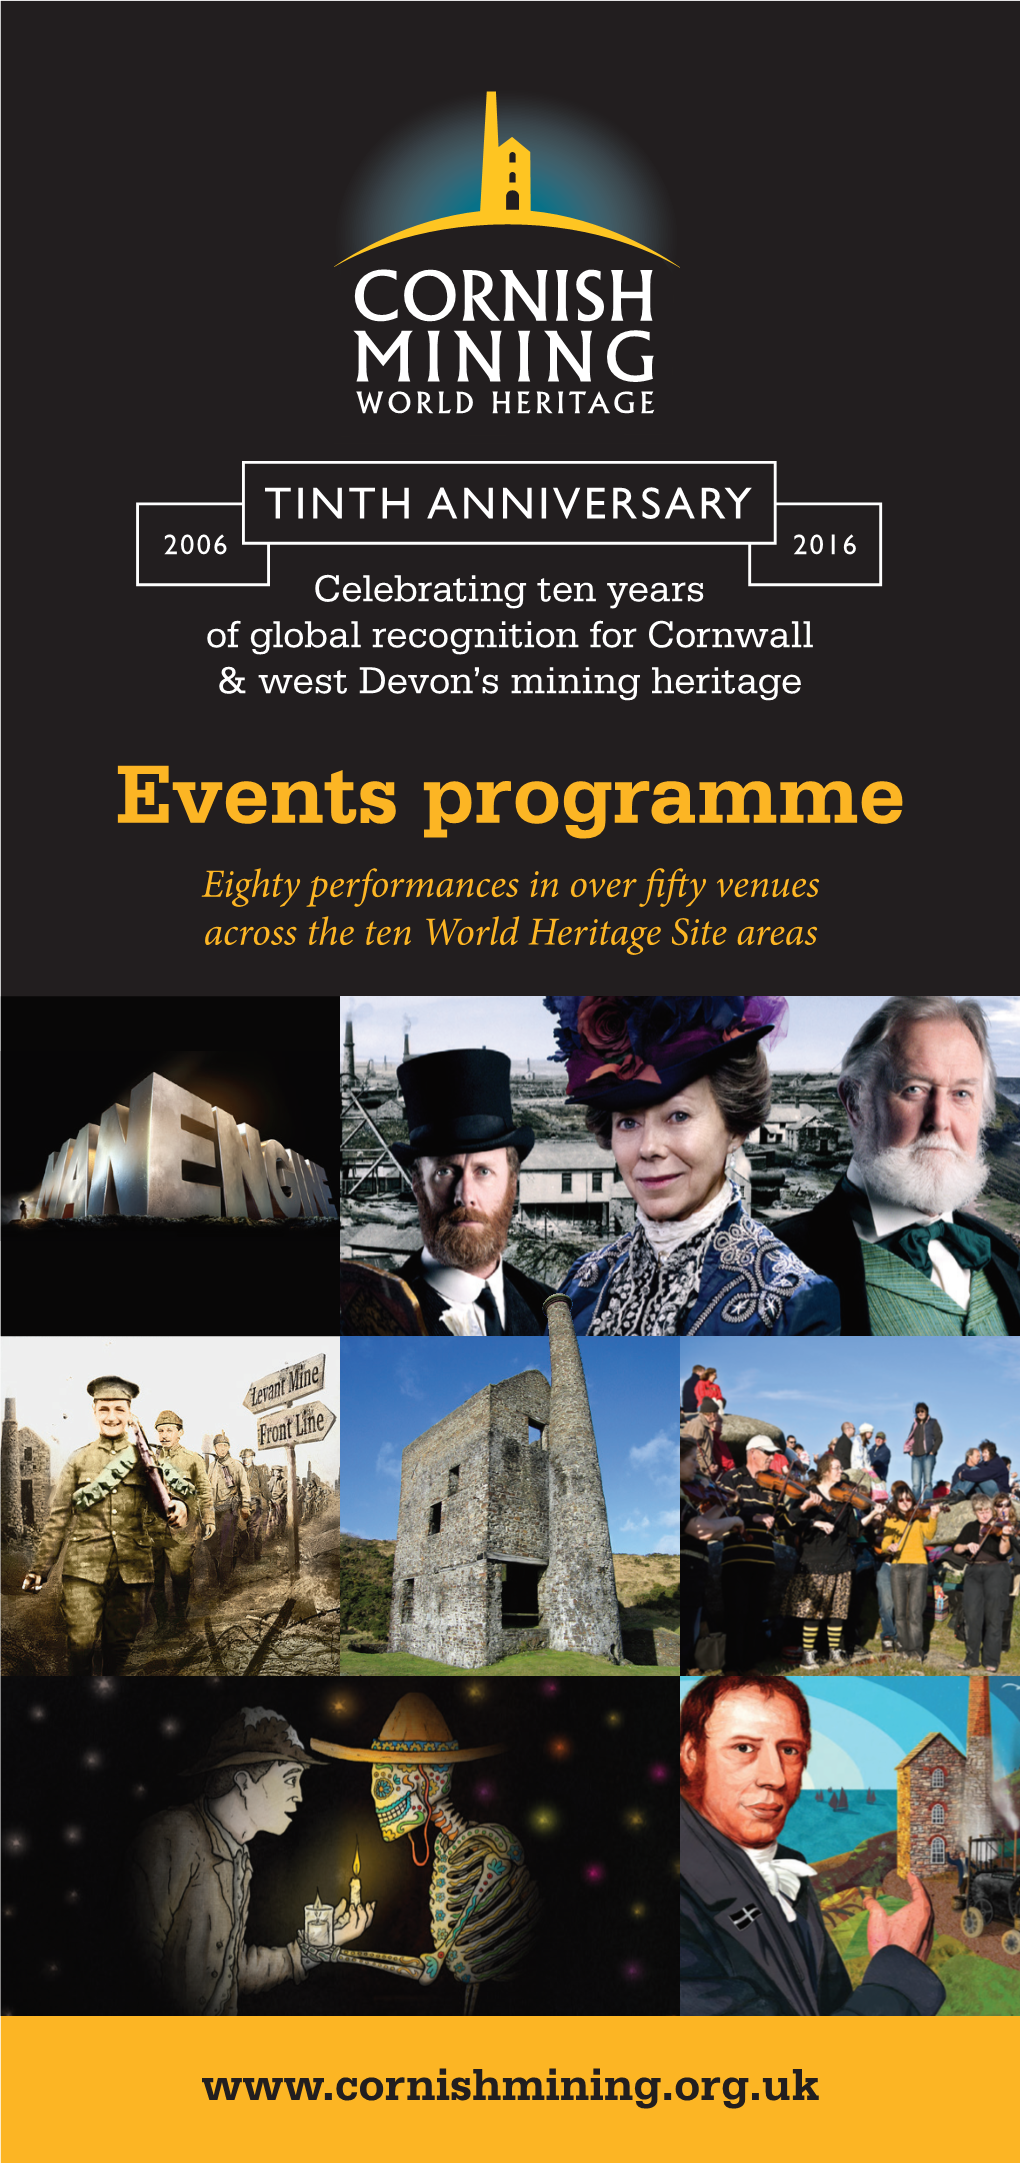 The Cornish Mining World Heritage Events Programme